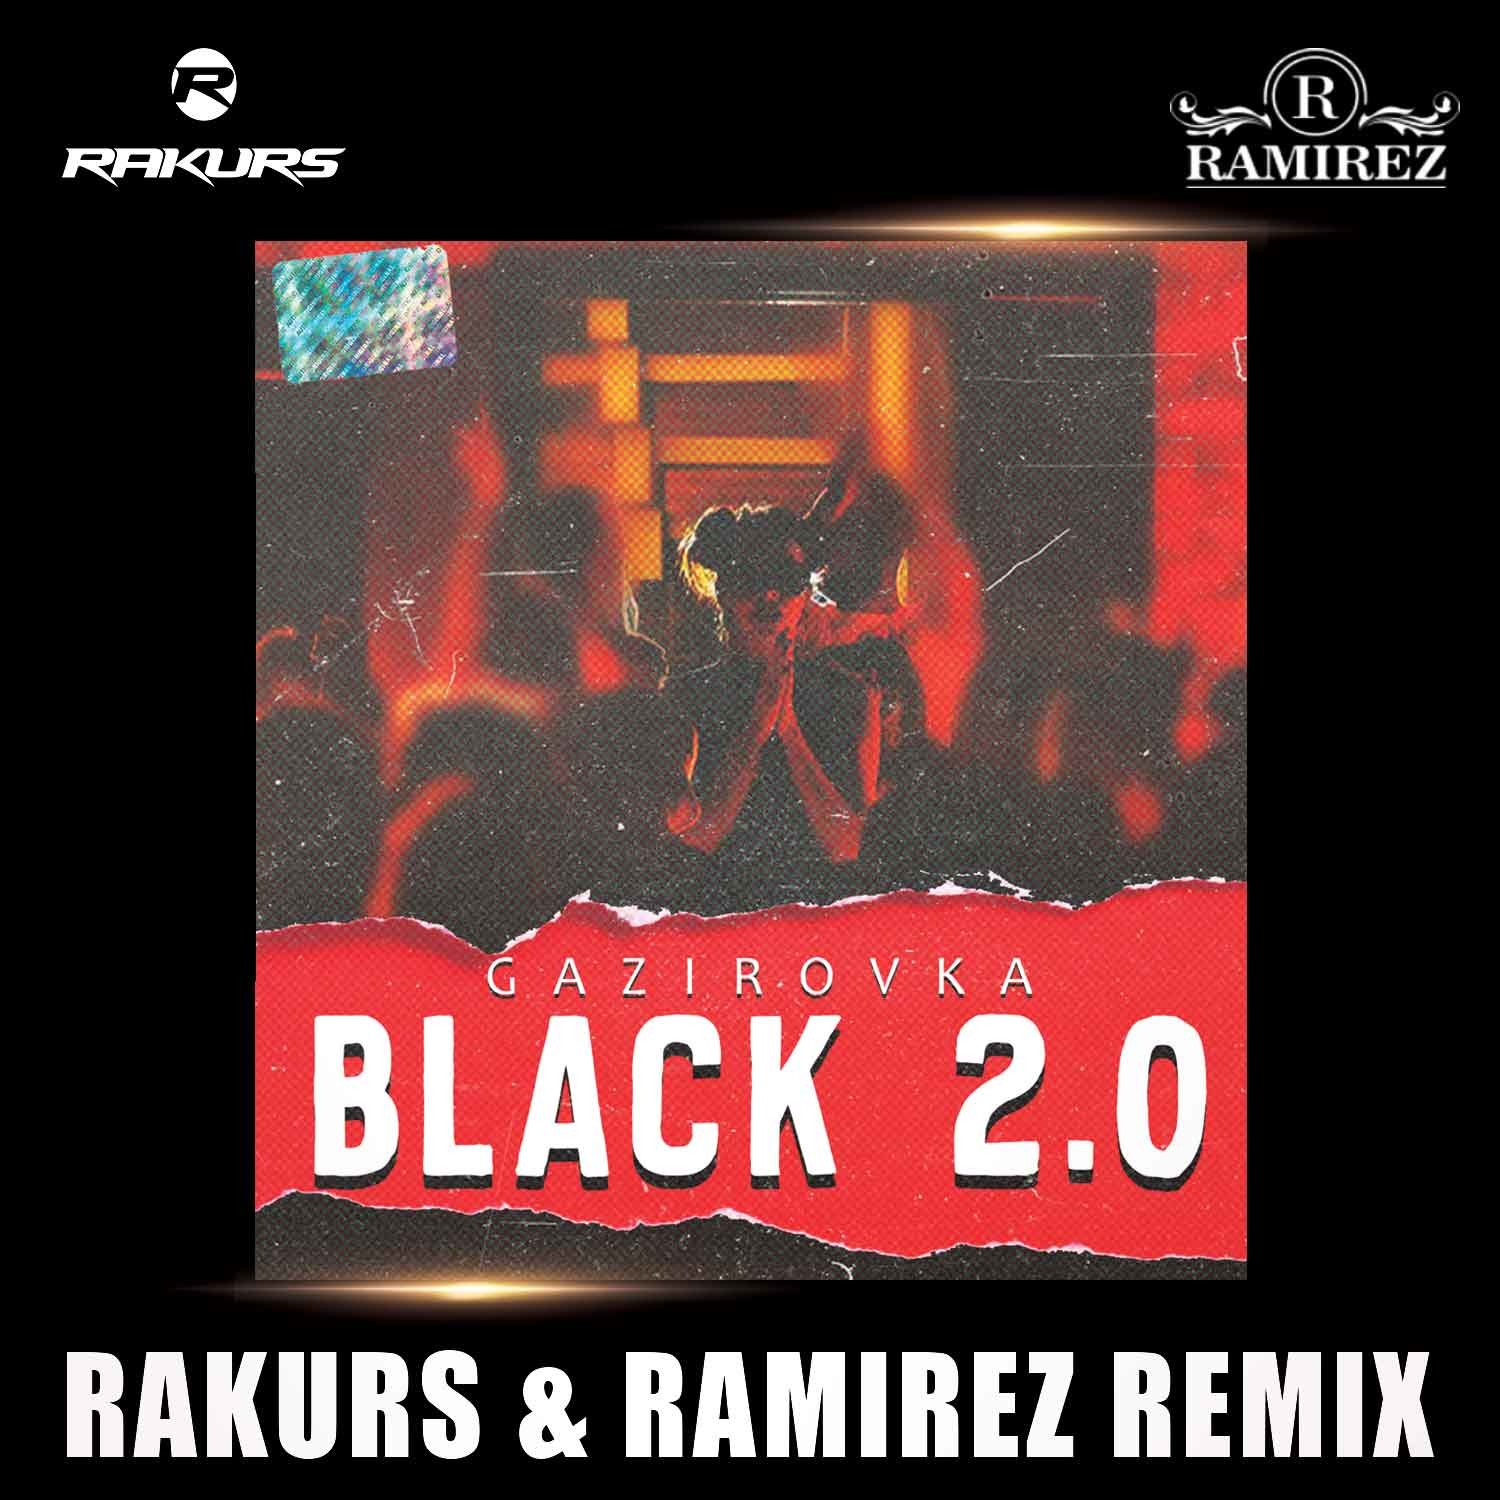 Veigel прощай ramirez remix. Газировка Блэк 2 0. DJ Rakurs. Группа GAZIROVKA. Black 2.0 GAZIROVKA какого года.